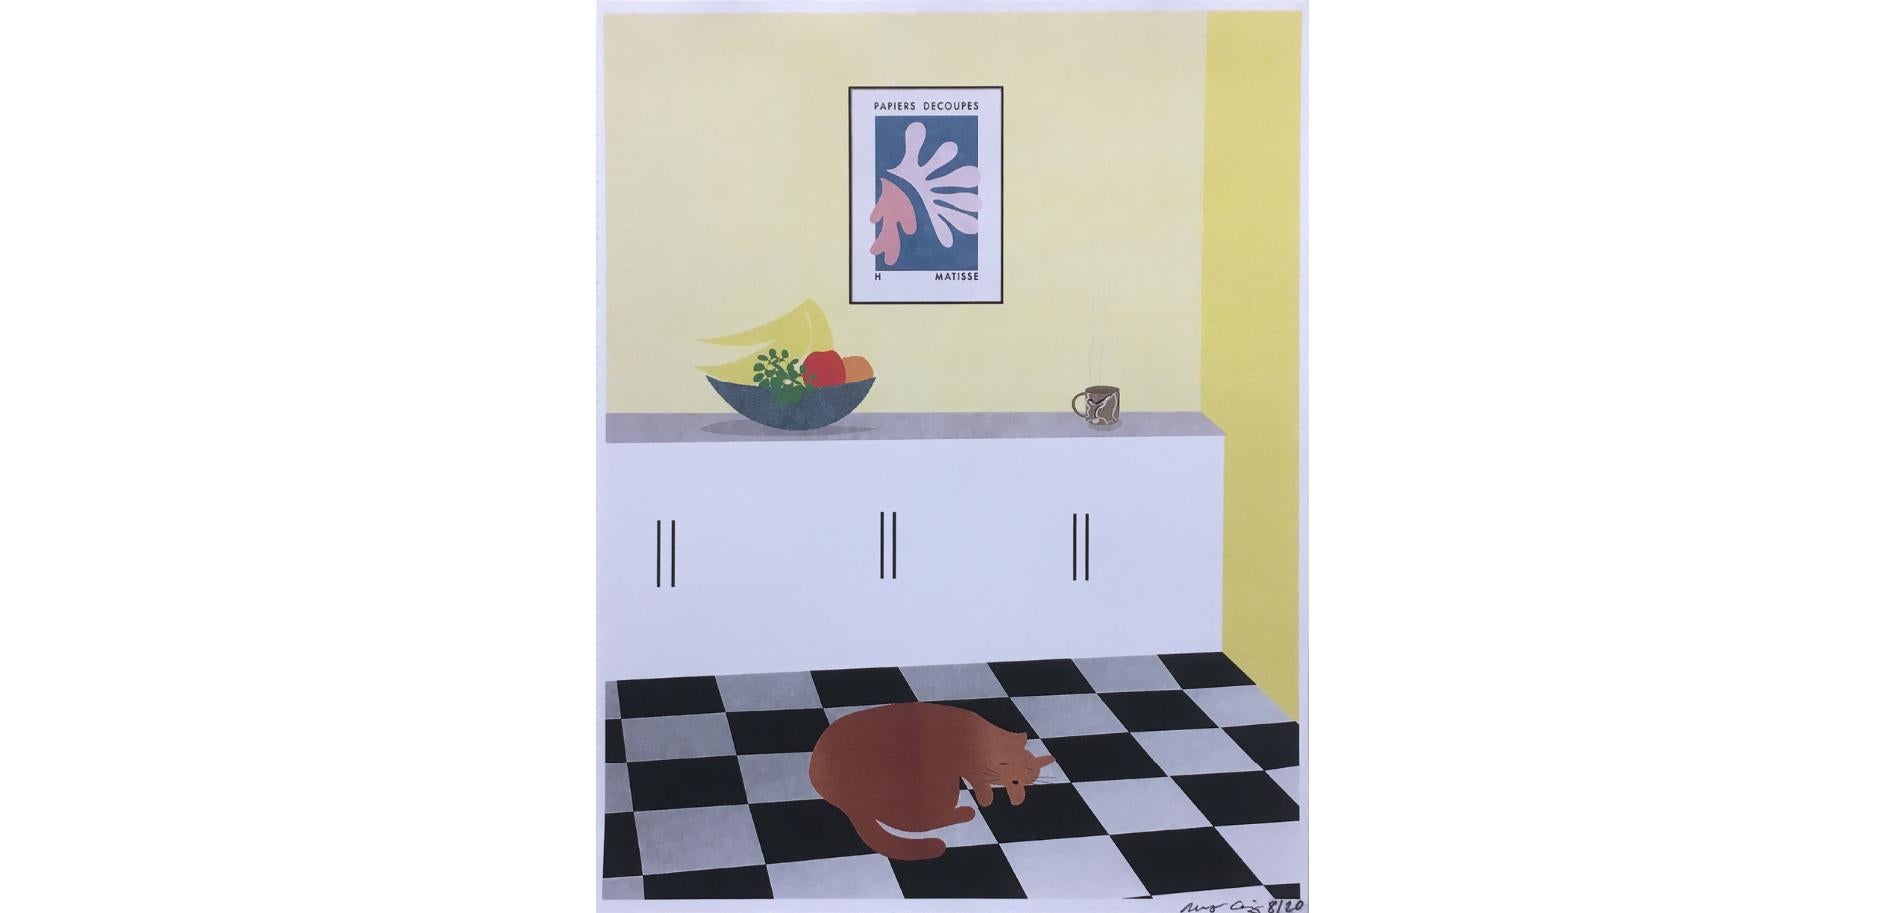 Kitchen Cat, Digital Painting Print, Interiors, Still Life, Fruit Bowl, Yellow  - Gray Still-Life Print by Molly Craig